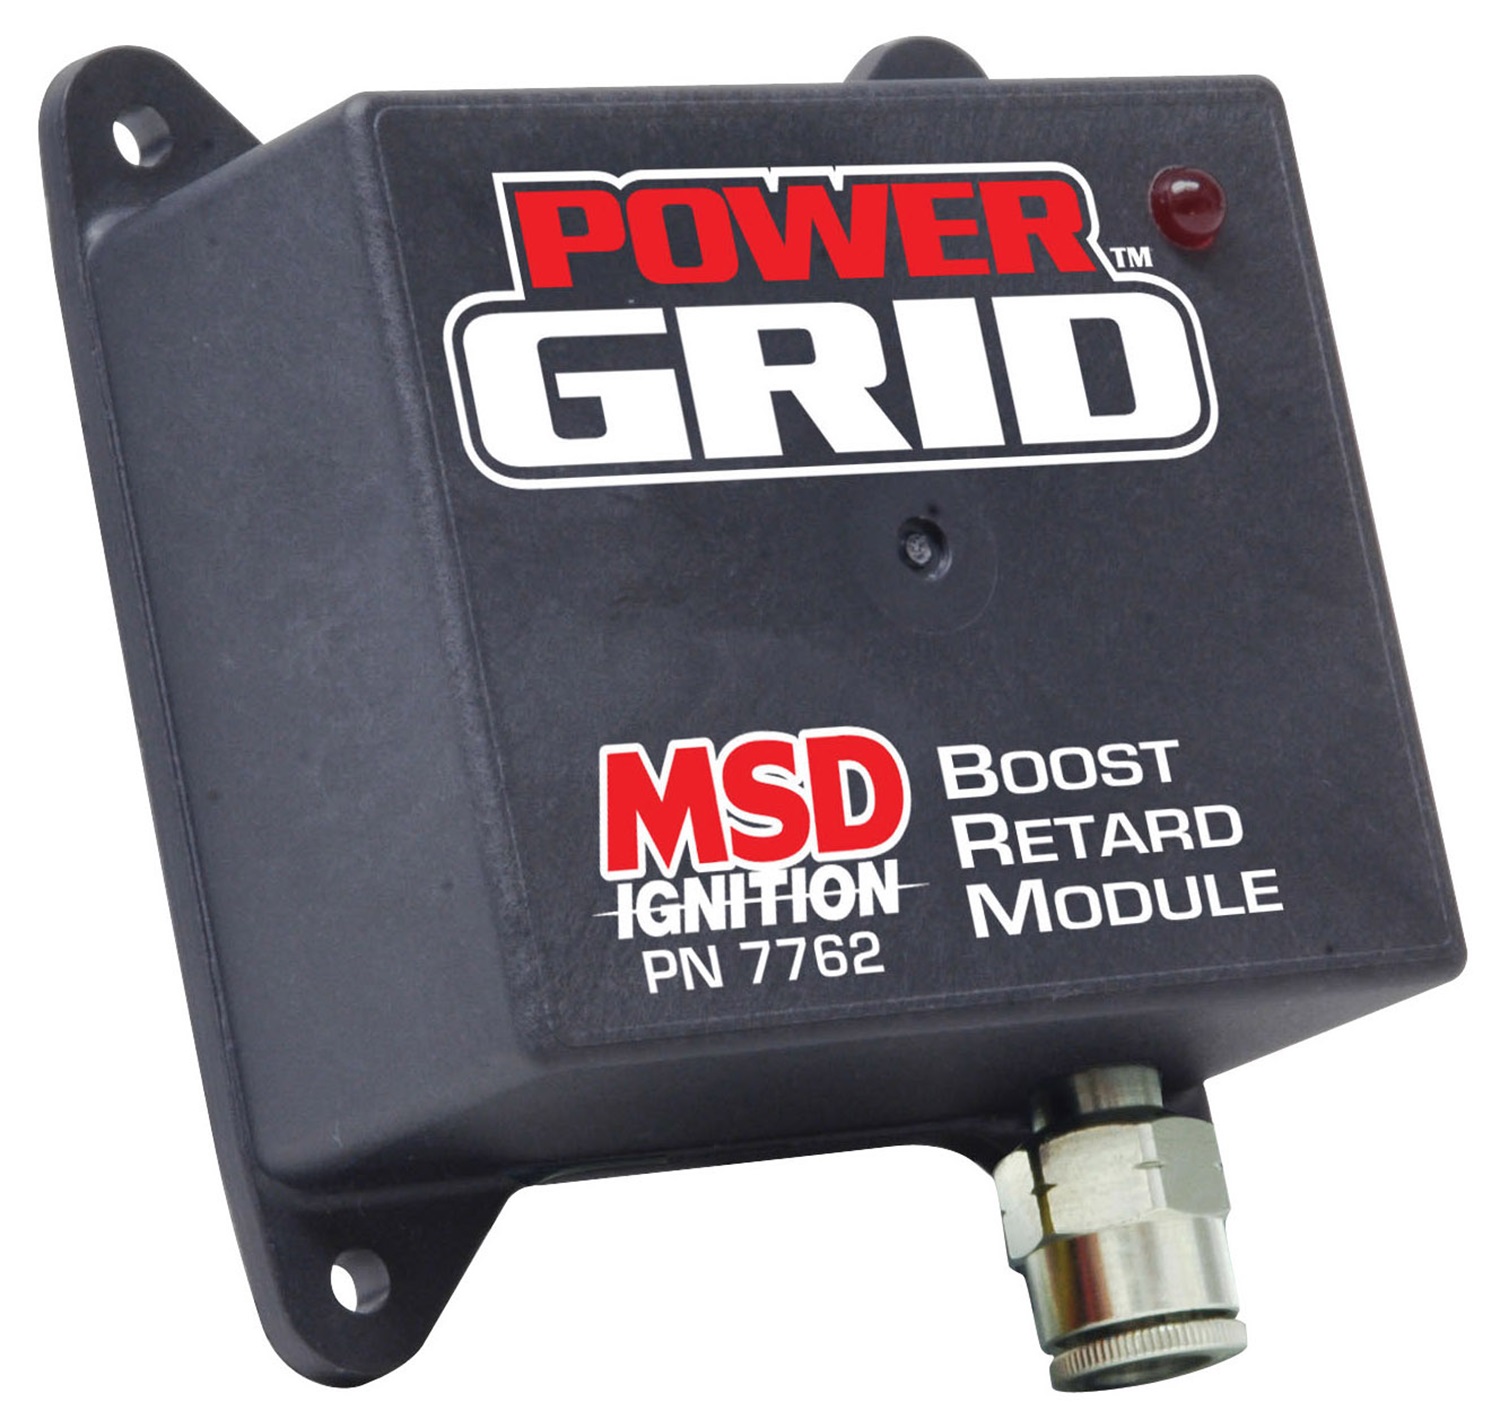 MSD Ignition MSD Ignition 7762 Power Grid Ignition System; Boost/Retard Module